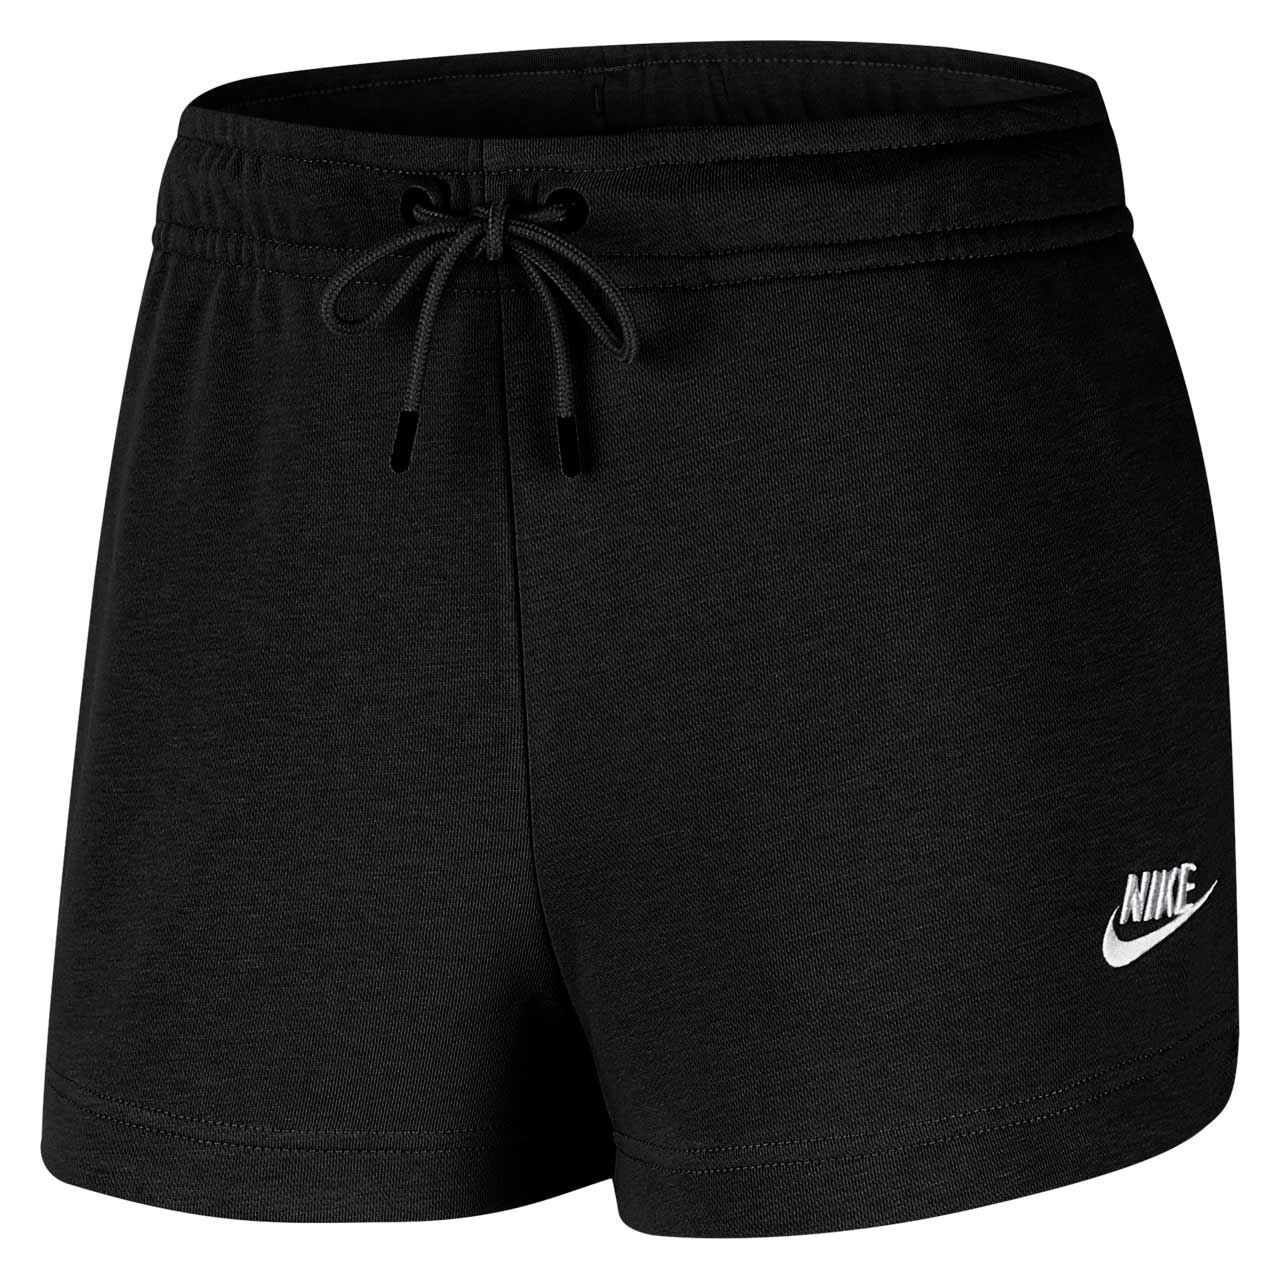 Damen Sporthose Essential Shorts